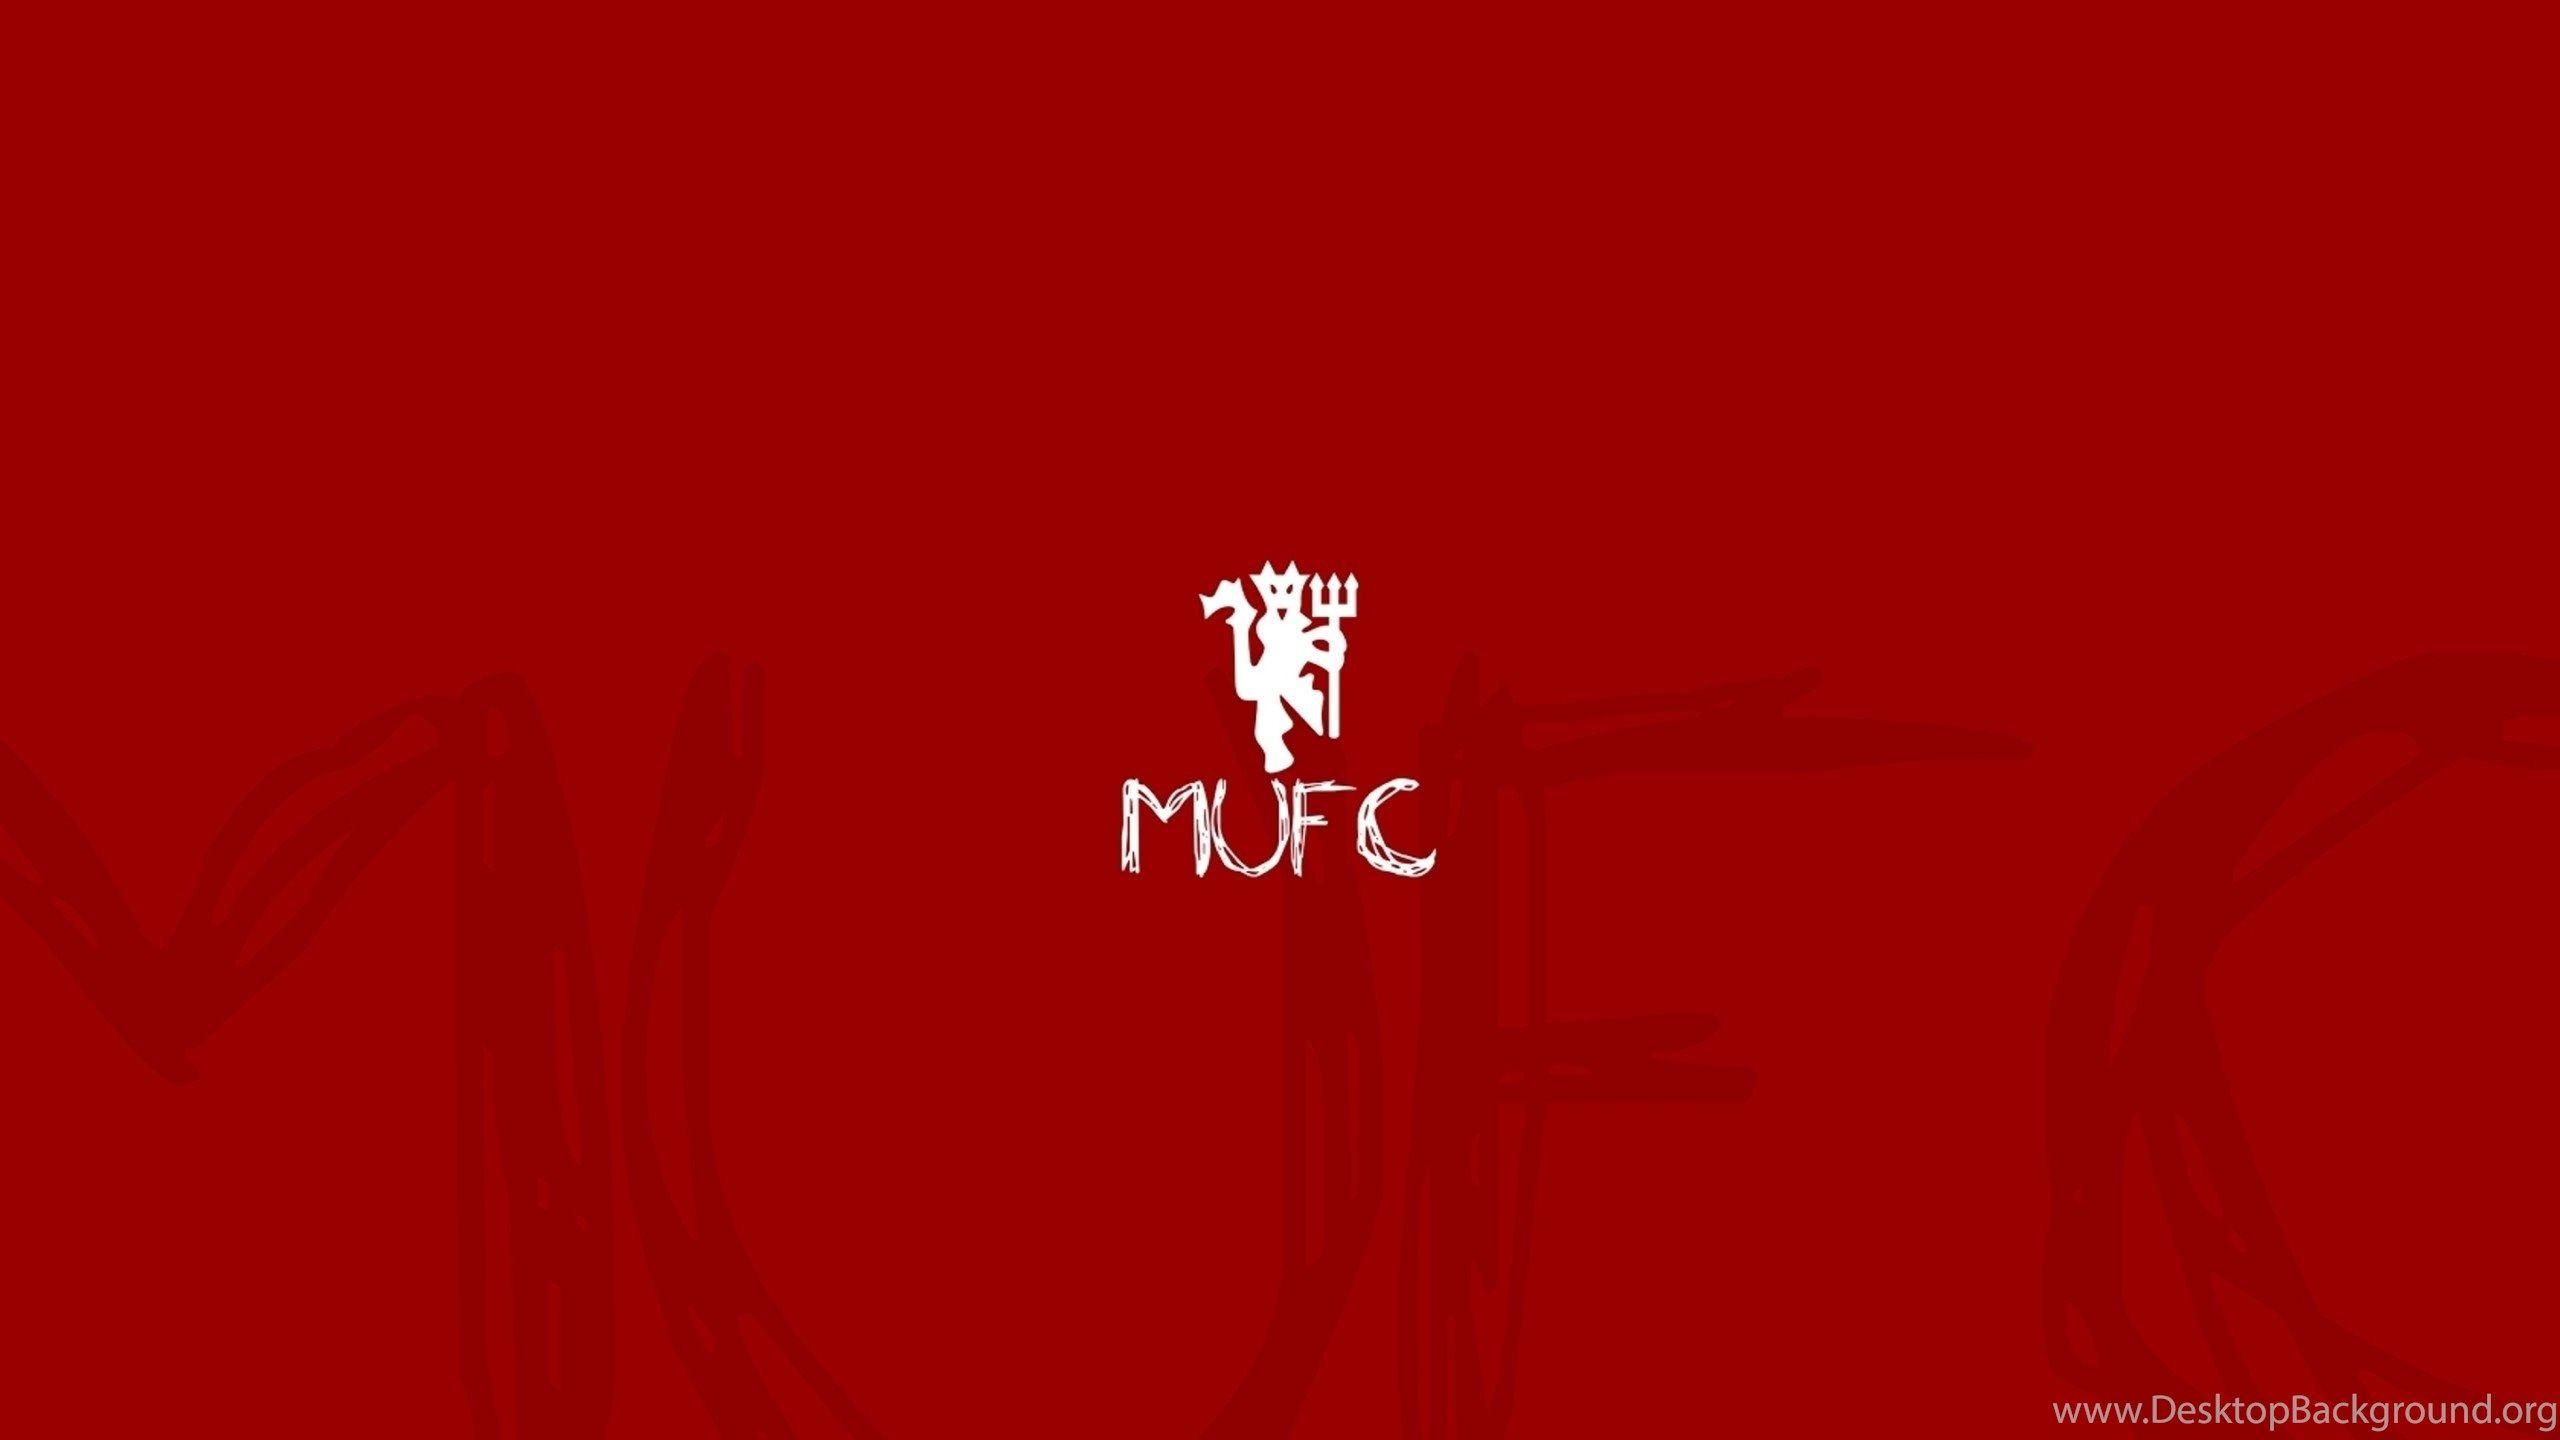 Download Manchester United Desktop Wallpaper Hd 2020 Gif